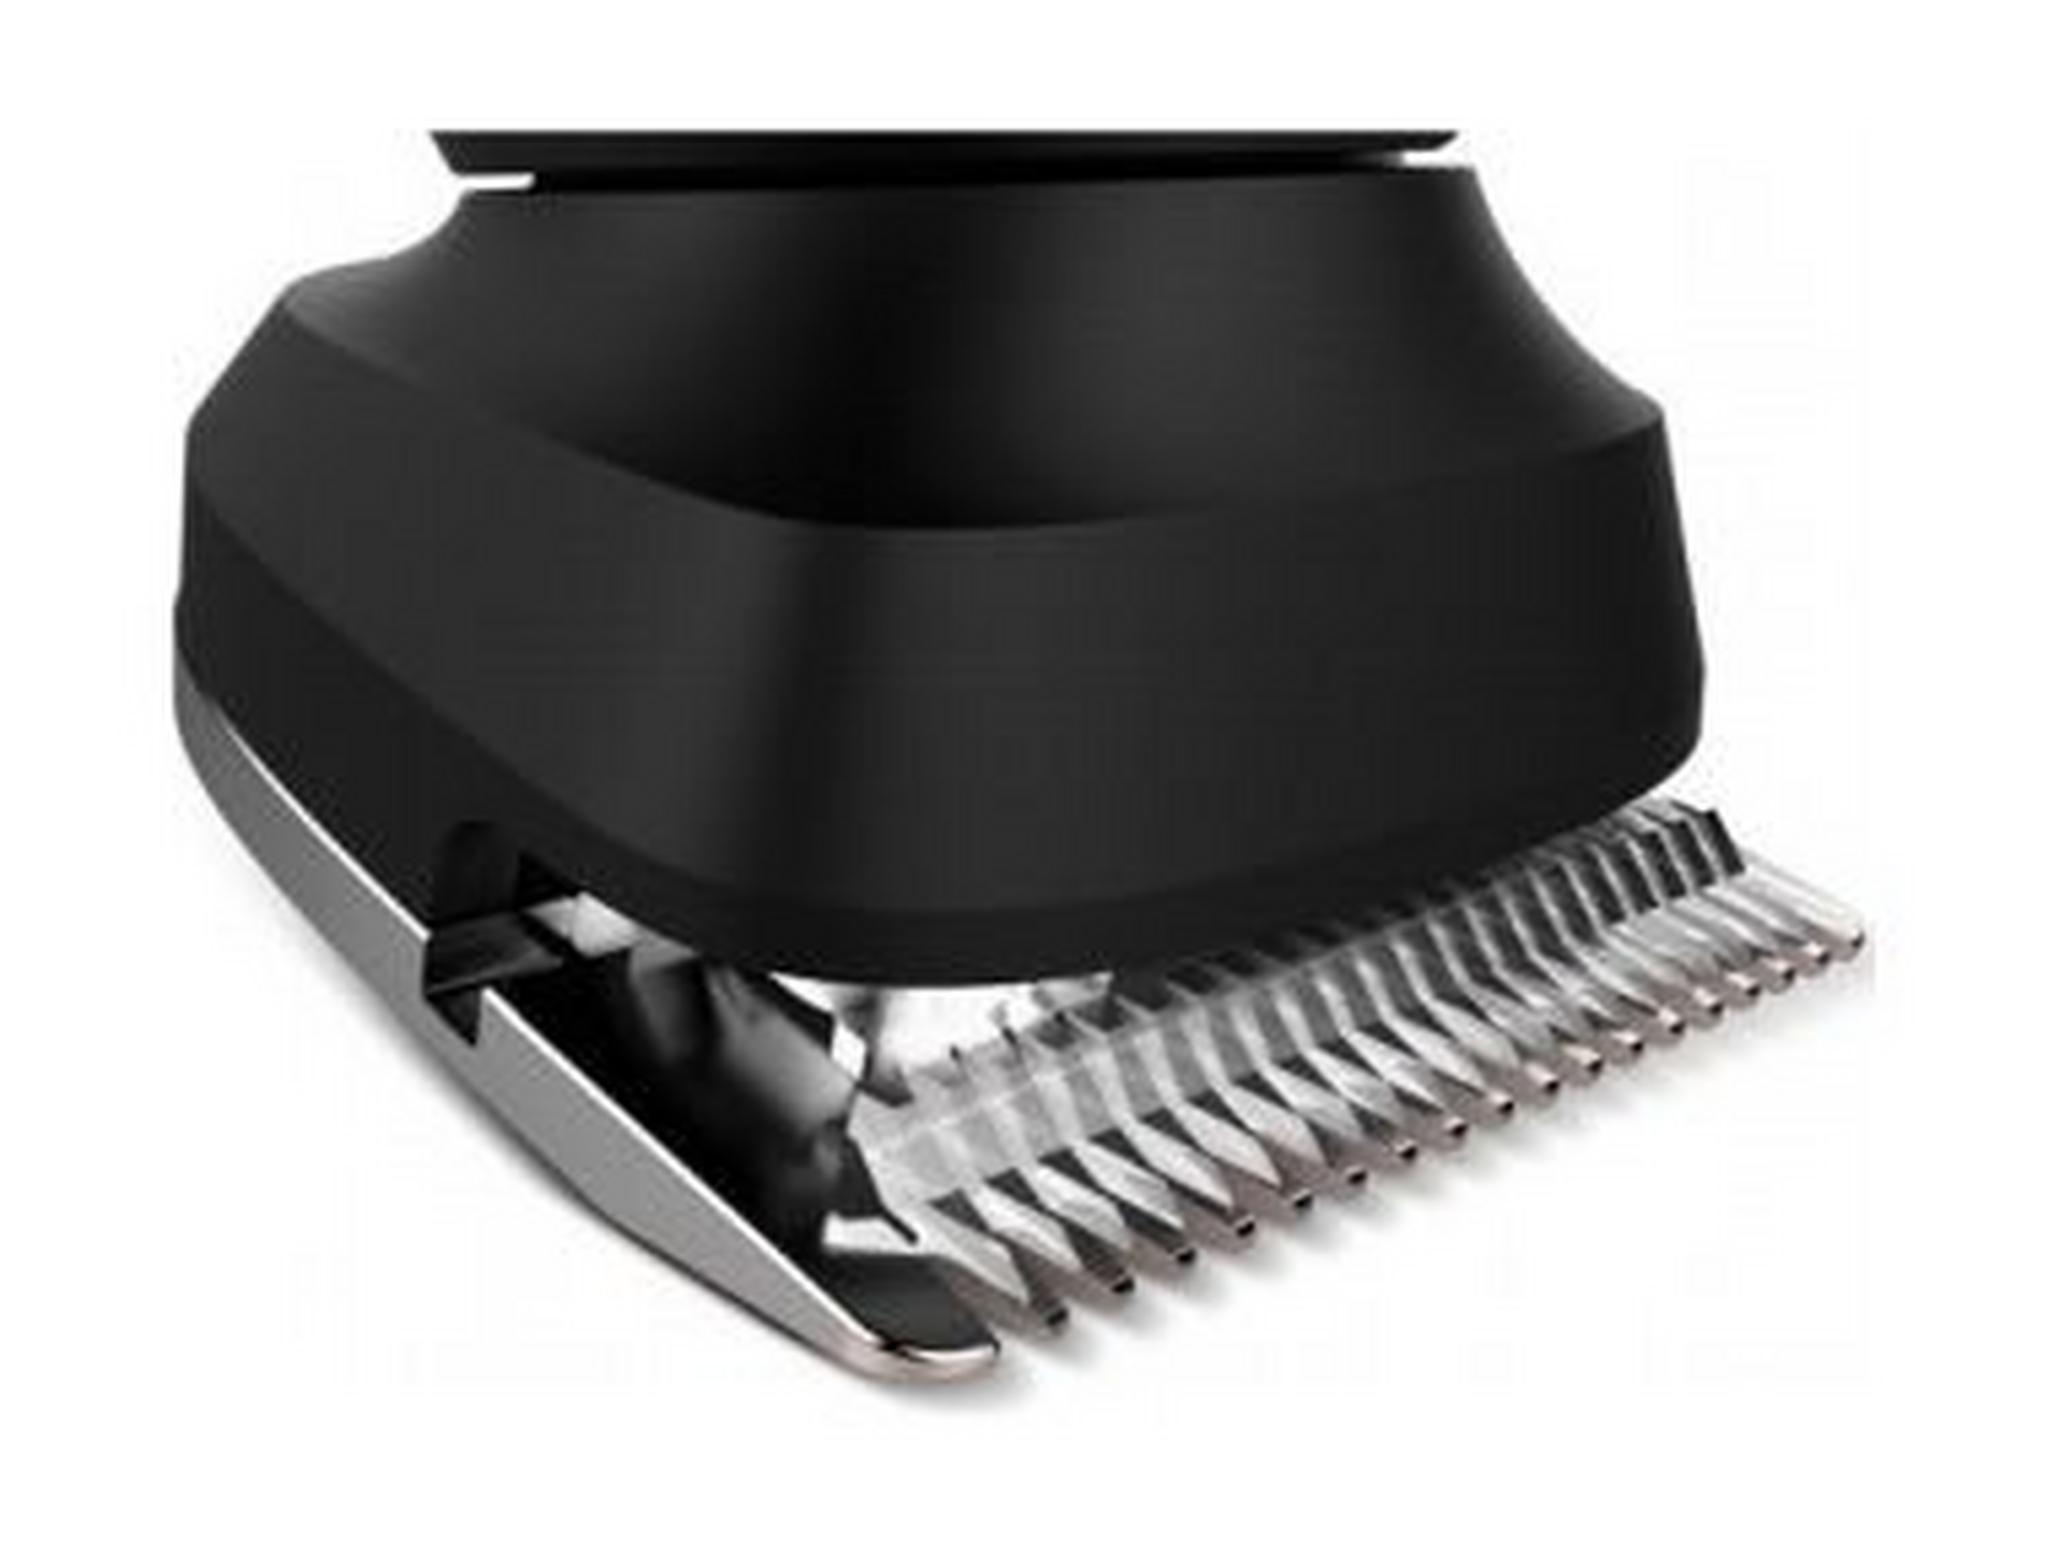 Philips Multigroom Series 7000 8-in-1 Head To Toe Trimmer For Maximum Versatility (QG3385/15) – Black / Silver